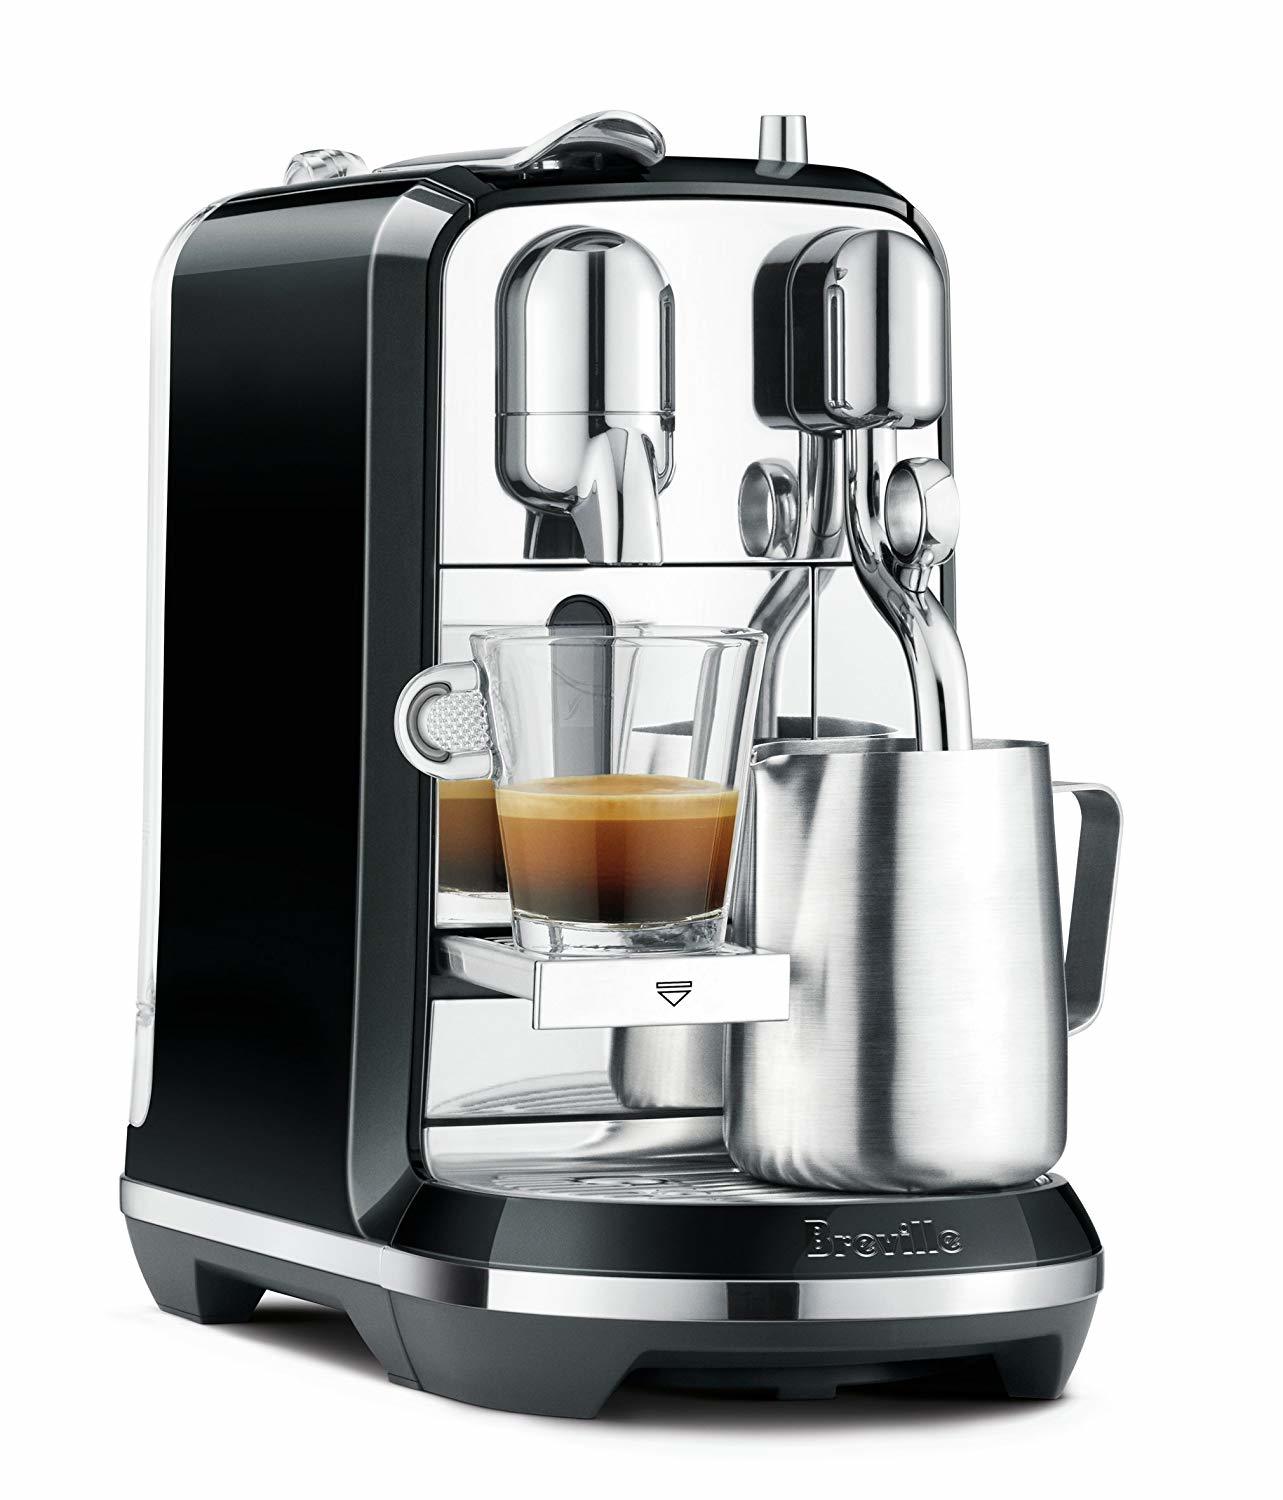 Breville Nespresso Creatista Single Serve Espresso Machine For $195-$259.99 From Amazon After Black Friday Savings!